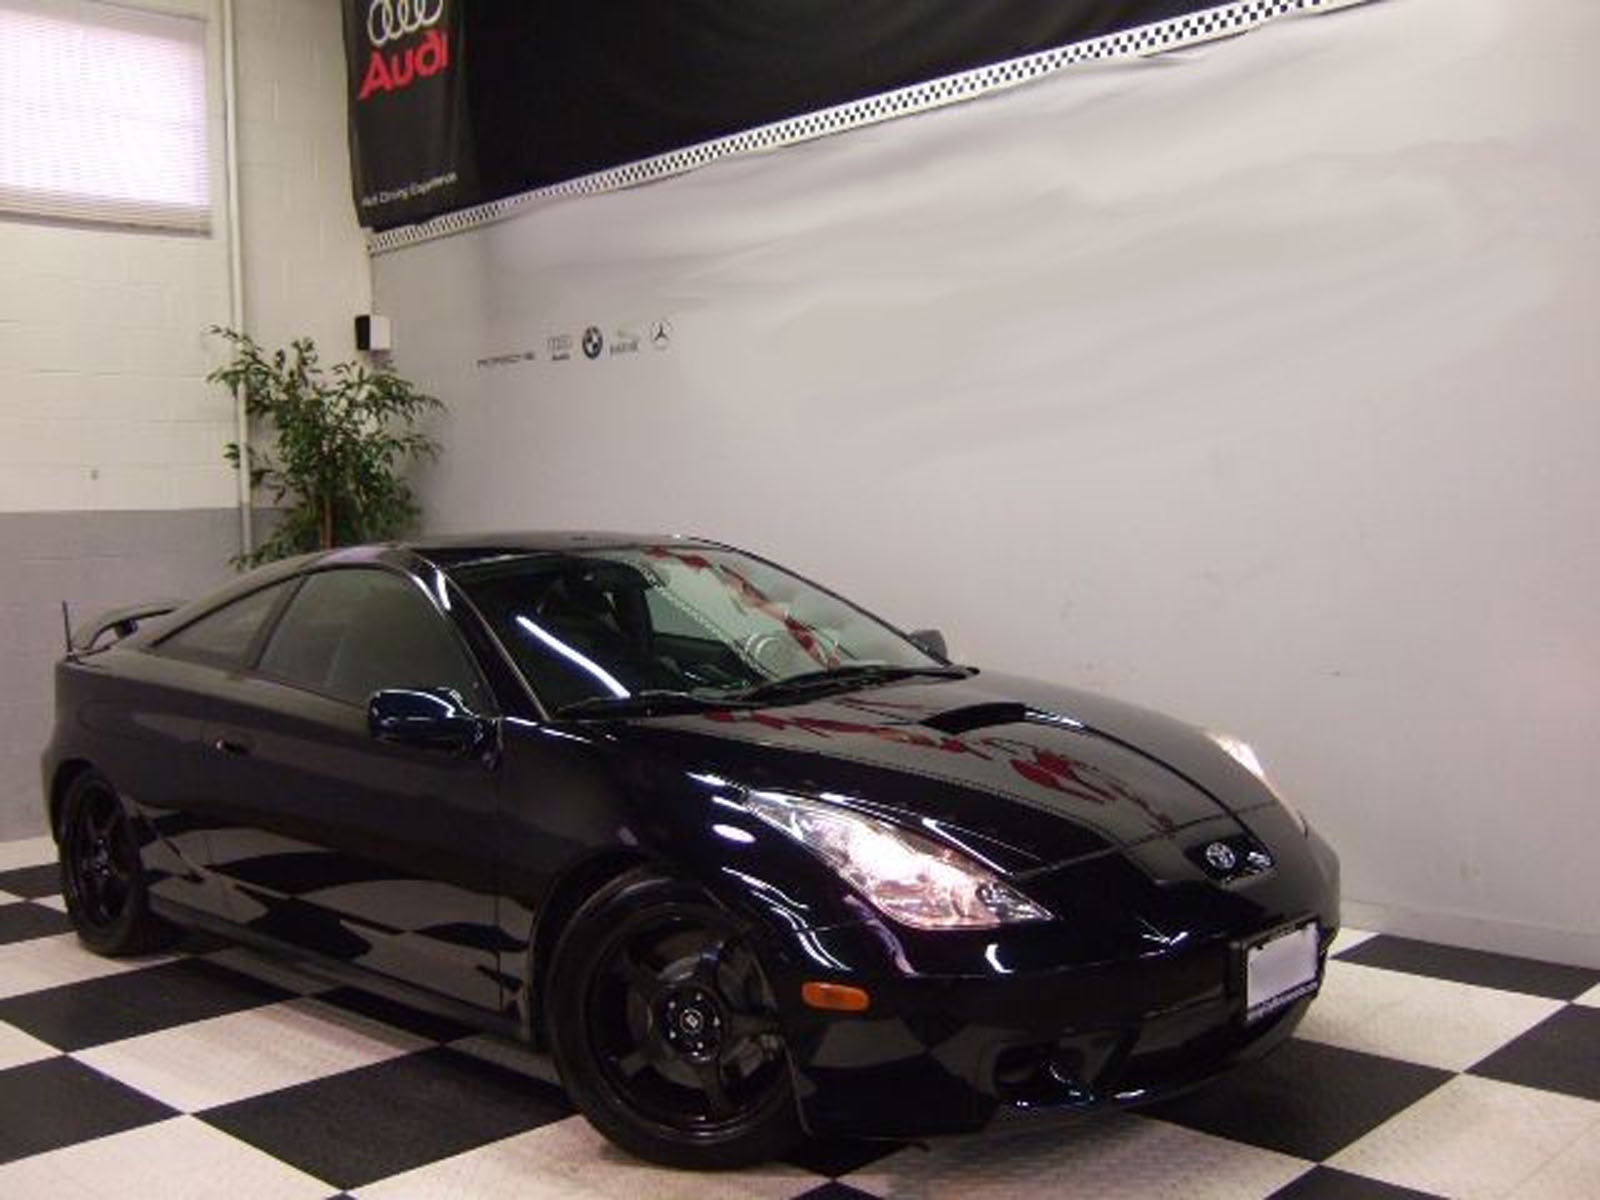 2001 Toyota Turbo [Celica] GT For Sale | Evanston Illinois